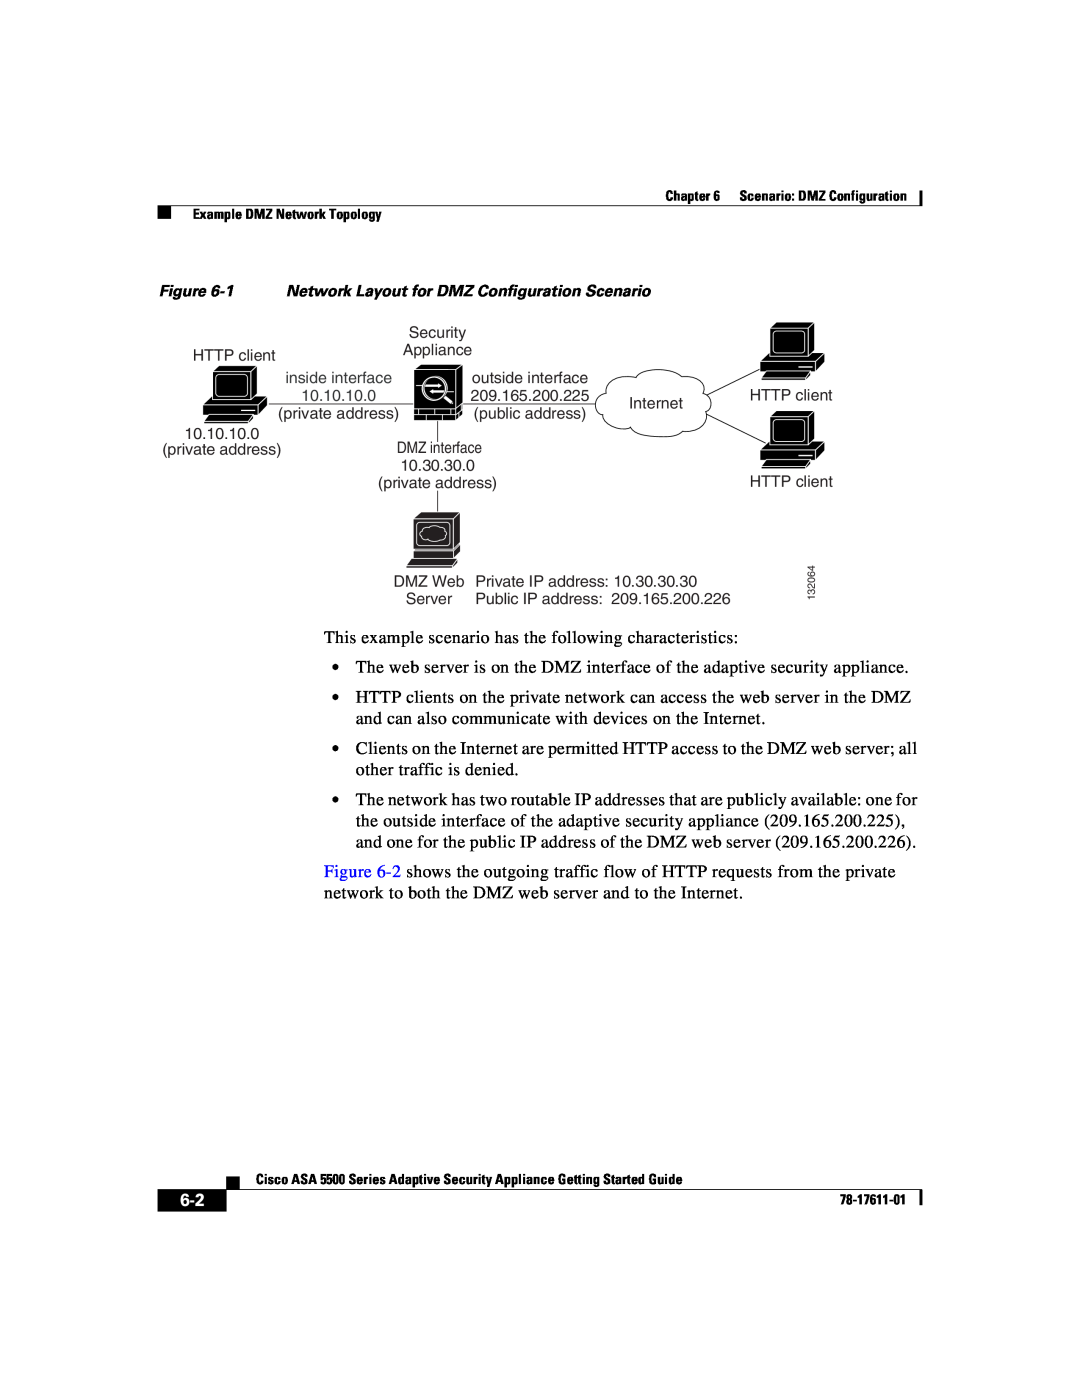 Cisco Systems ASA 5500 manual Network Layout for DMZ Configuration Scenario 